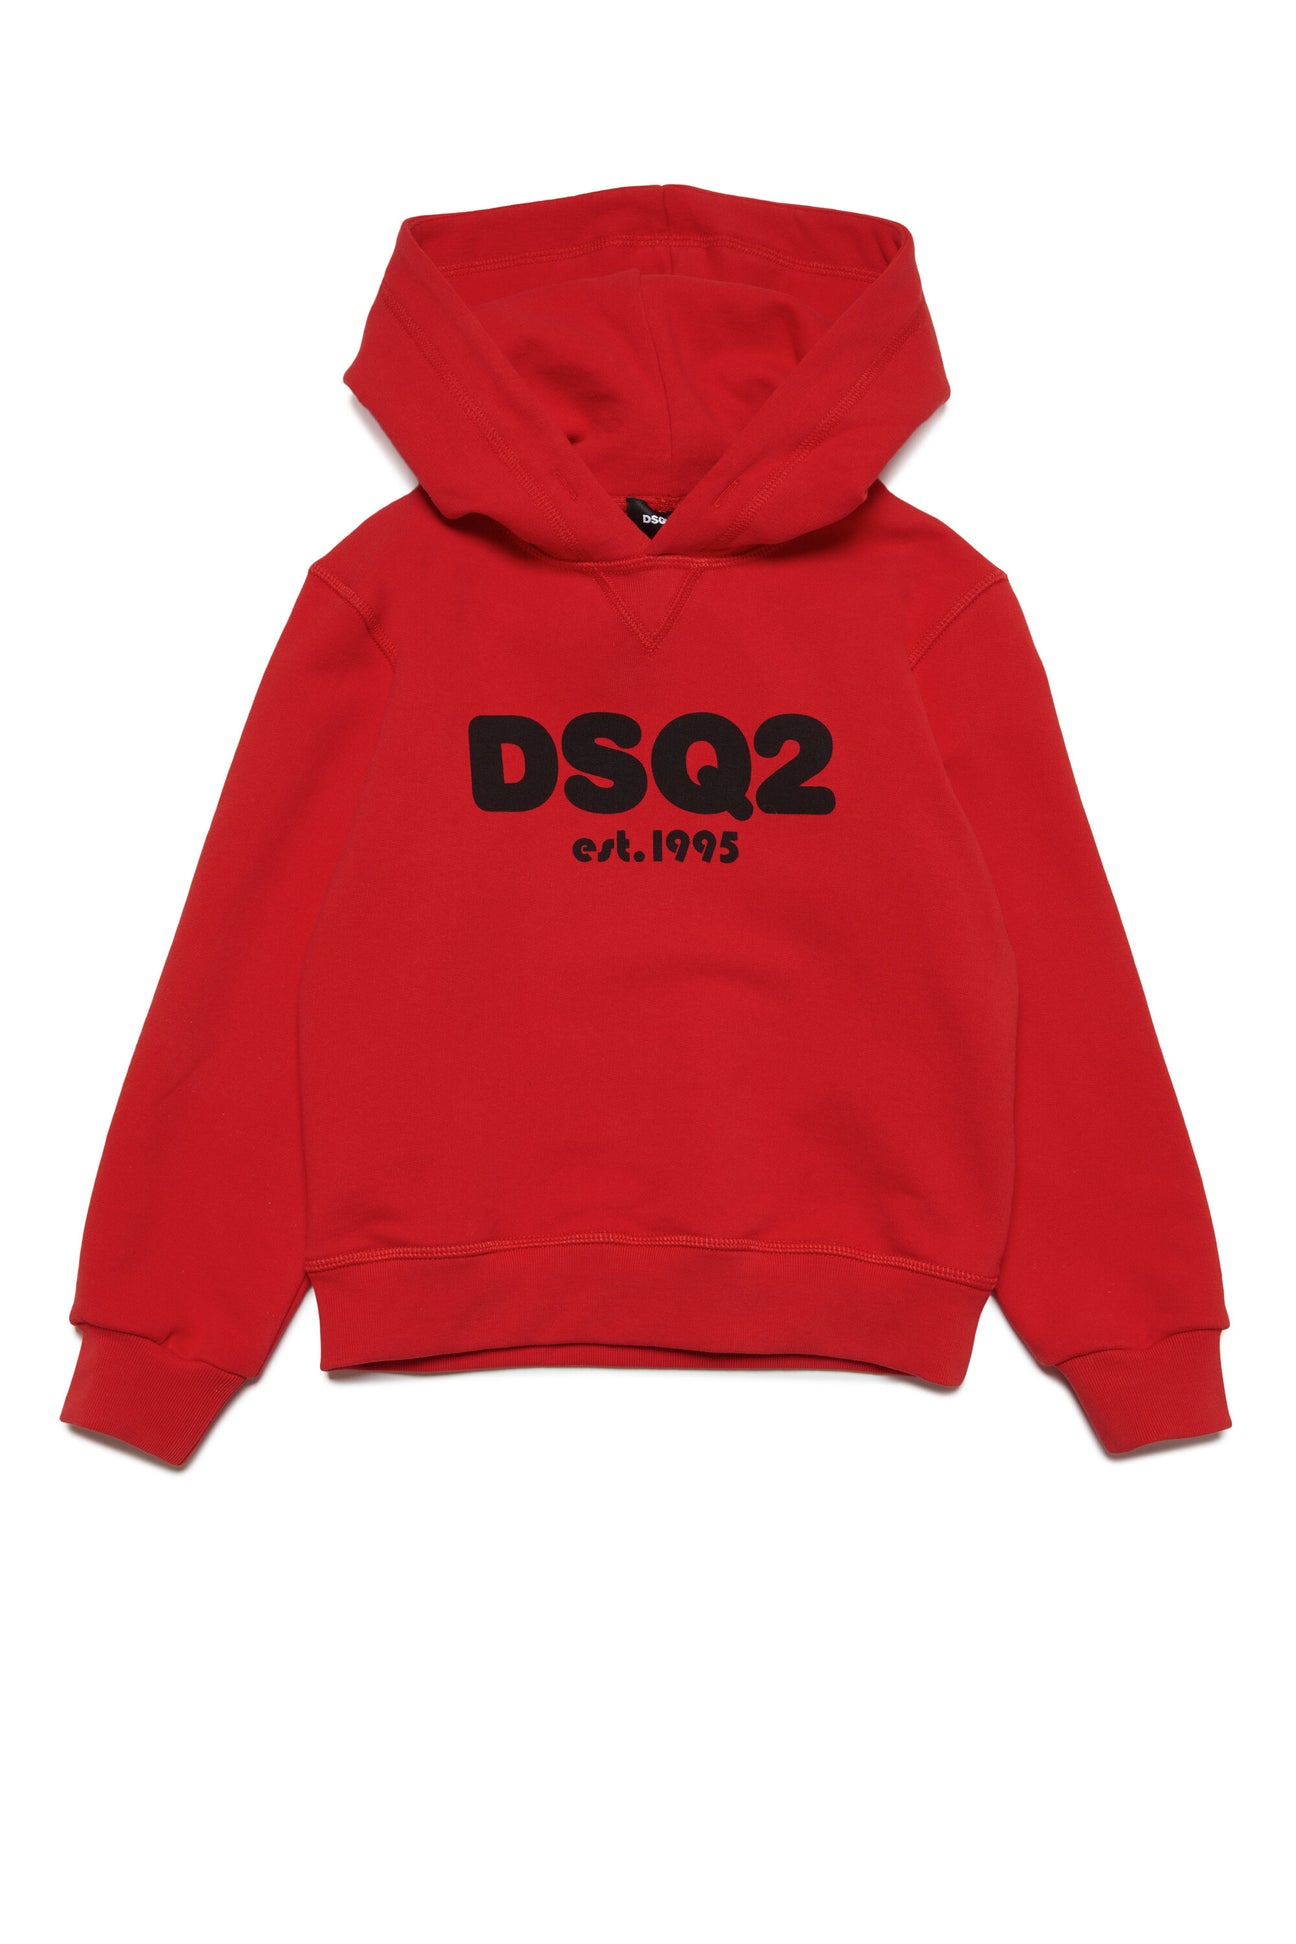 Hooded sweatshirt with logo DSQ2 est.1995 